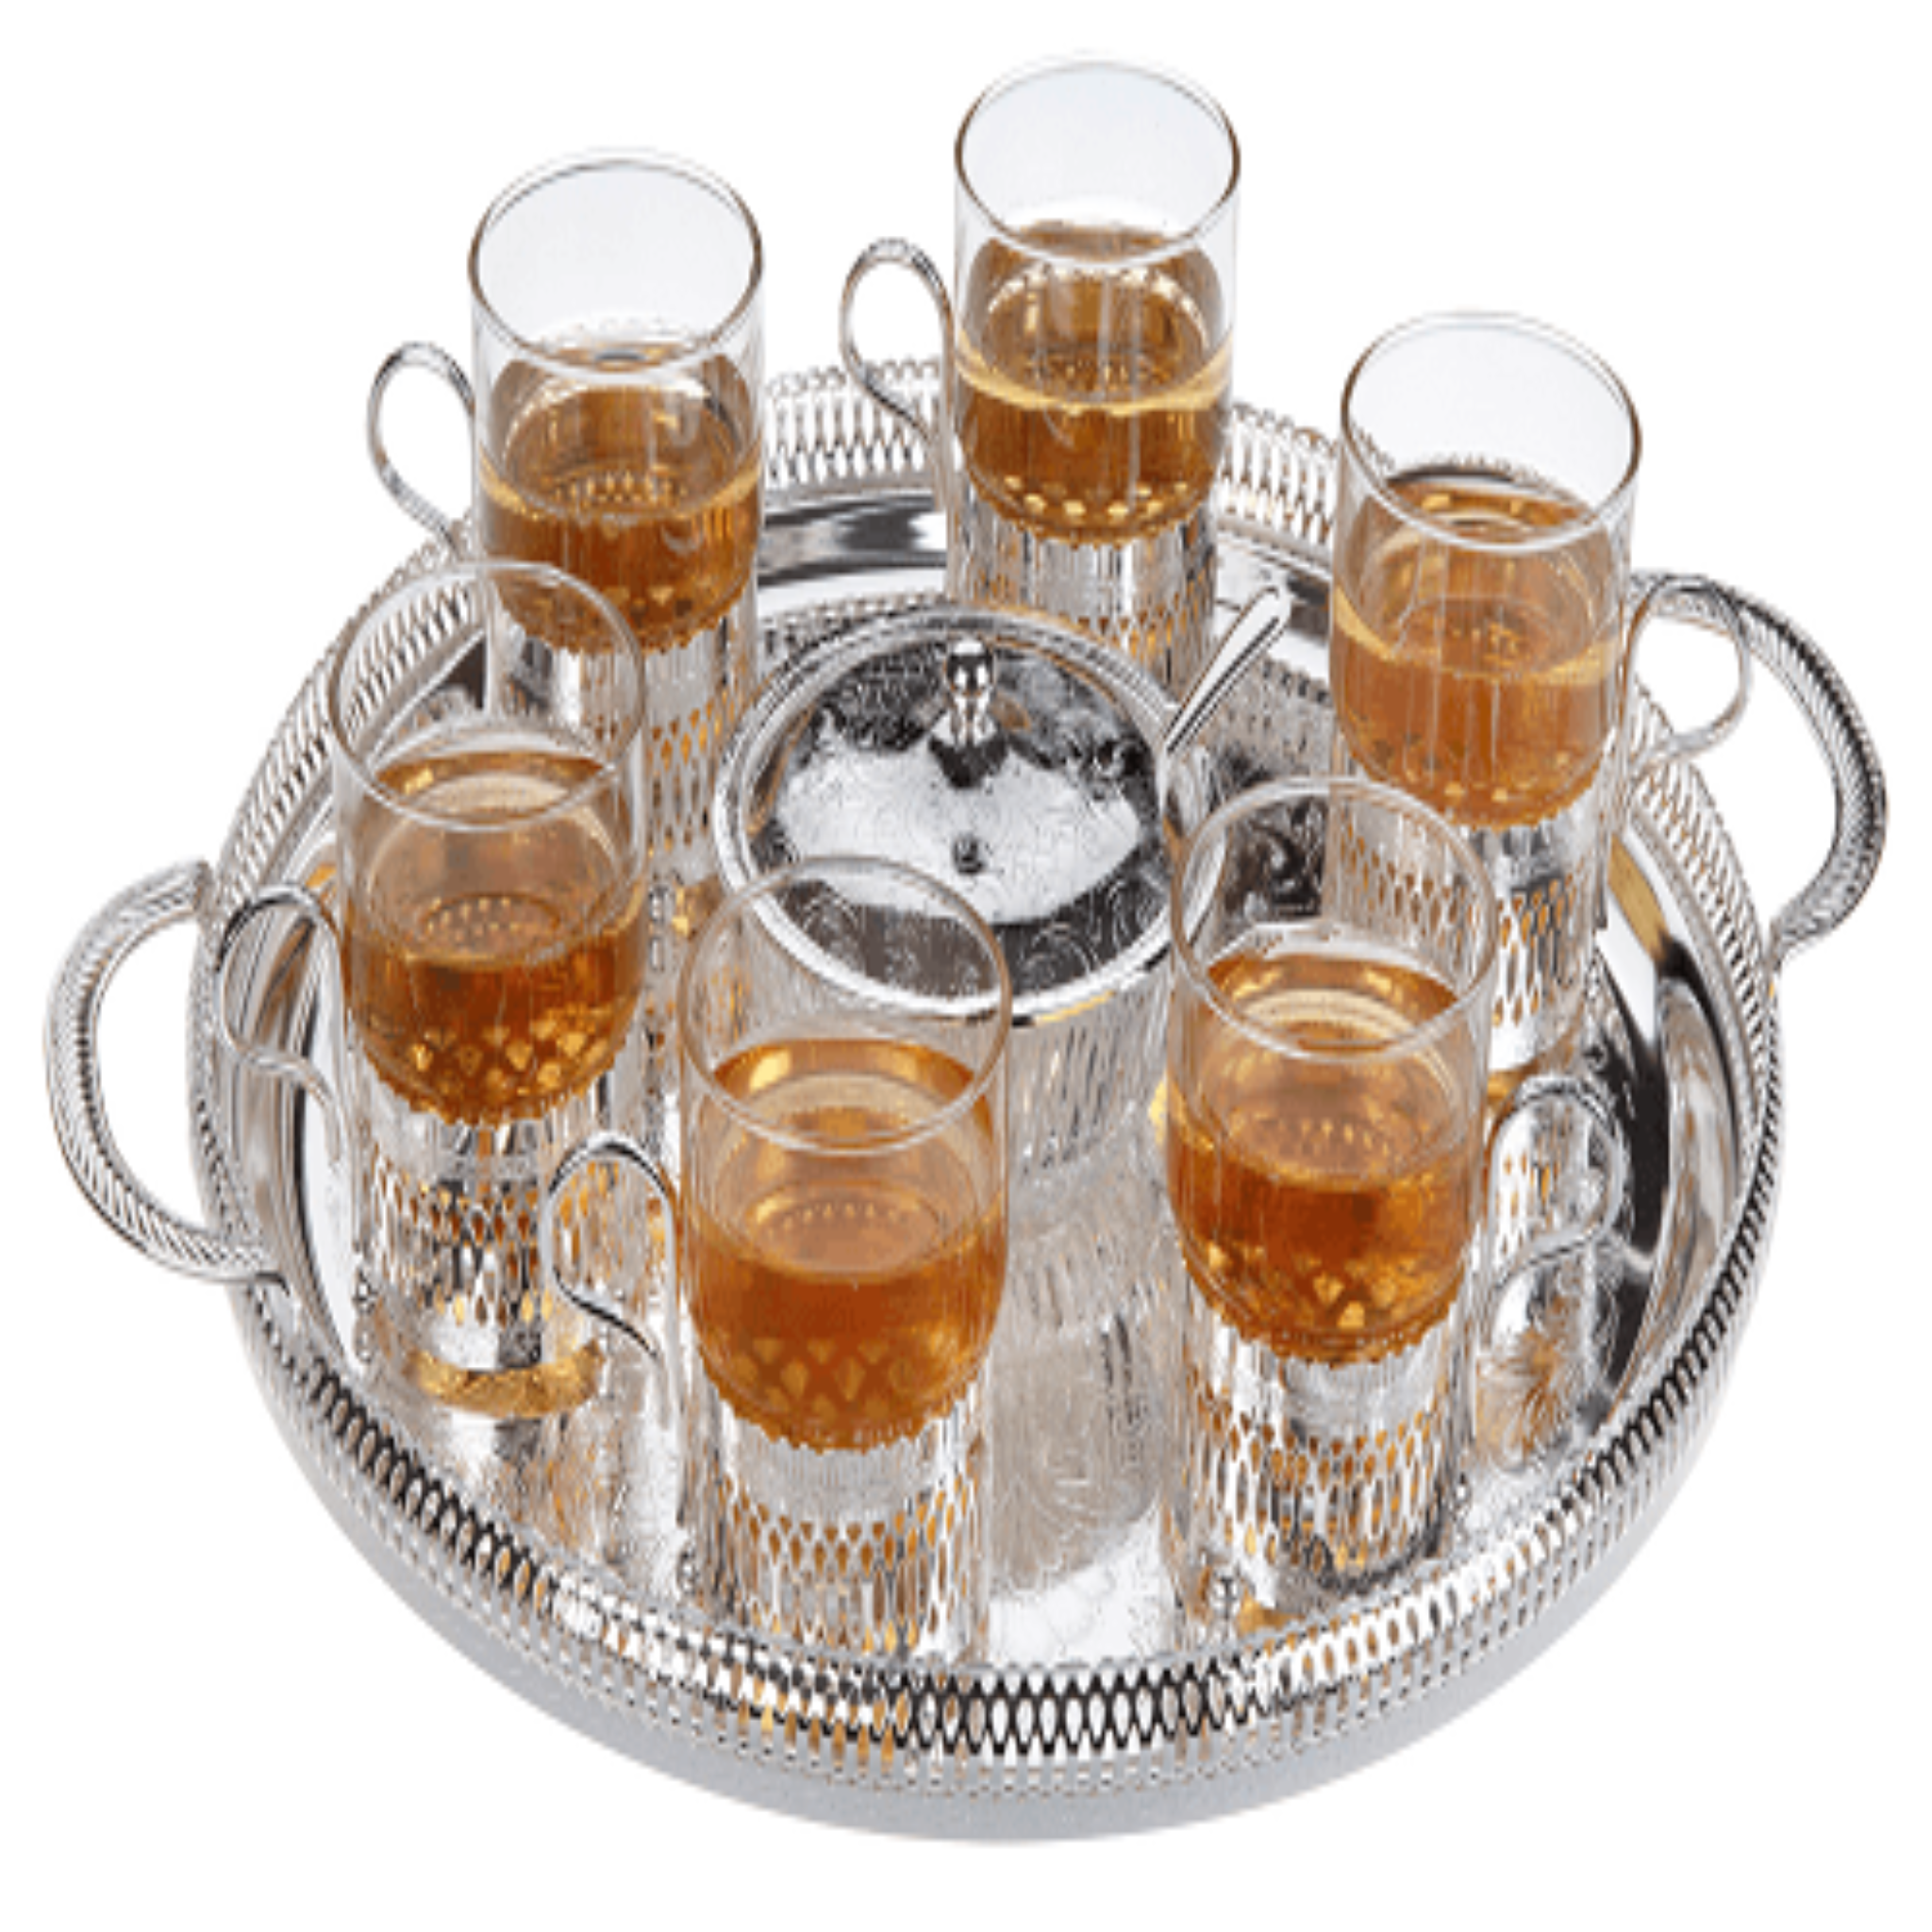 Queen Anne Round Tea Set with Sugar Dish & Spoon - Silver - 26000366